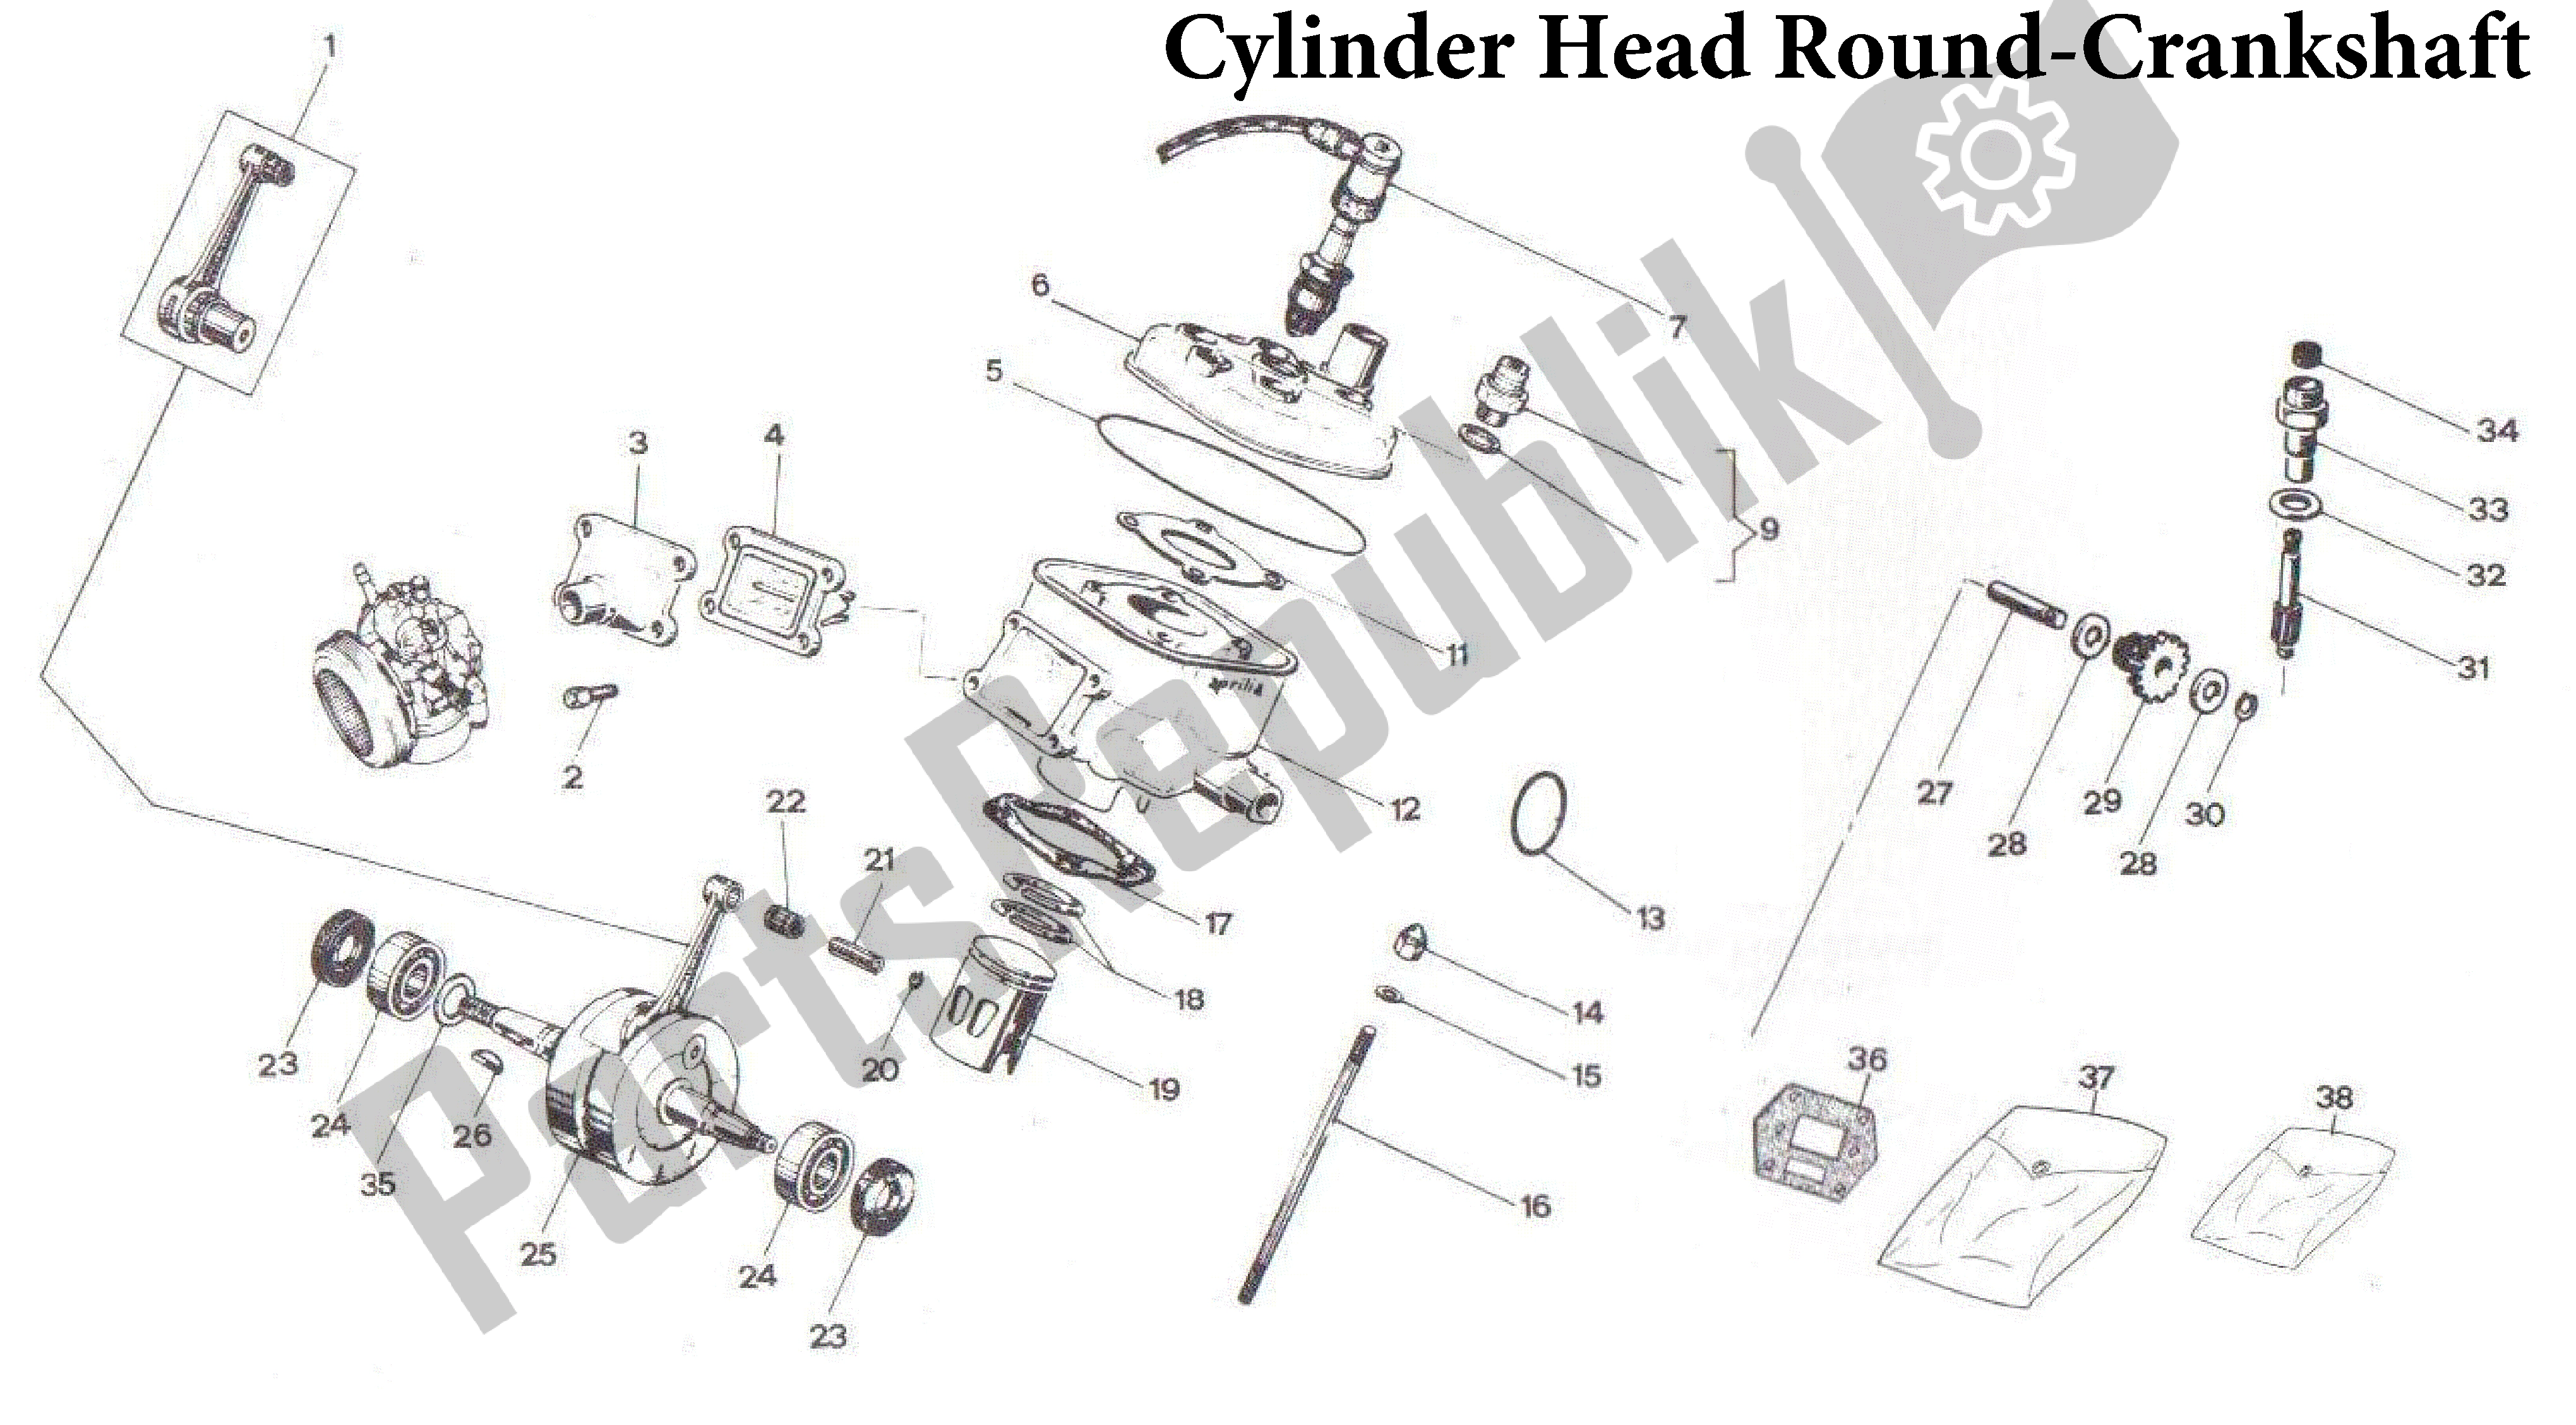 All parts for the Cylinder Head Round-crankshaft of the Aprilia AF1 50 1986 - 1988